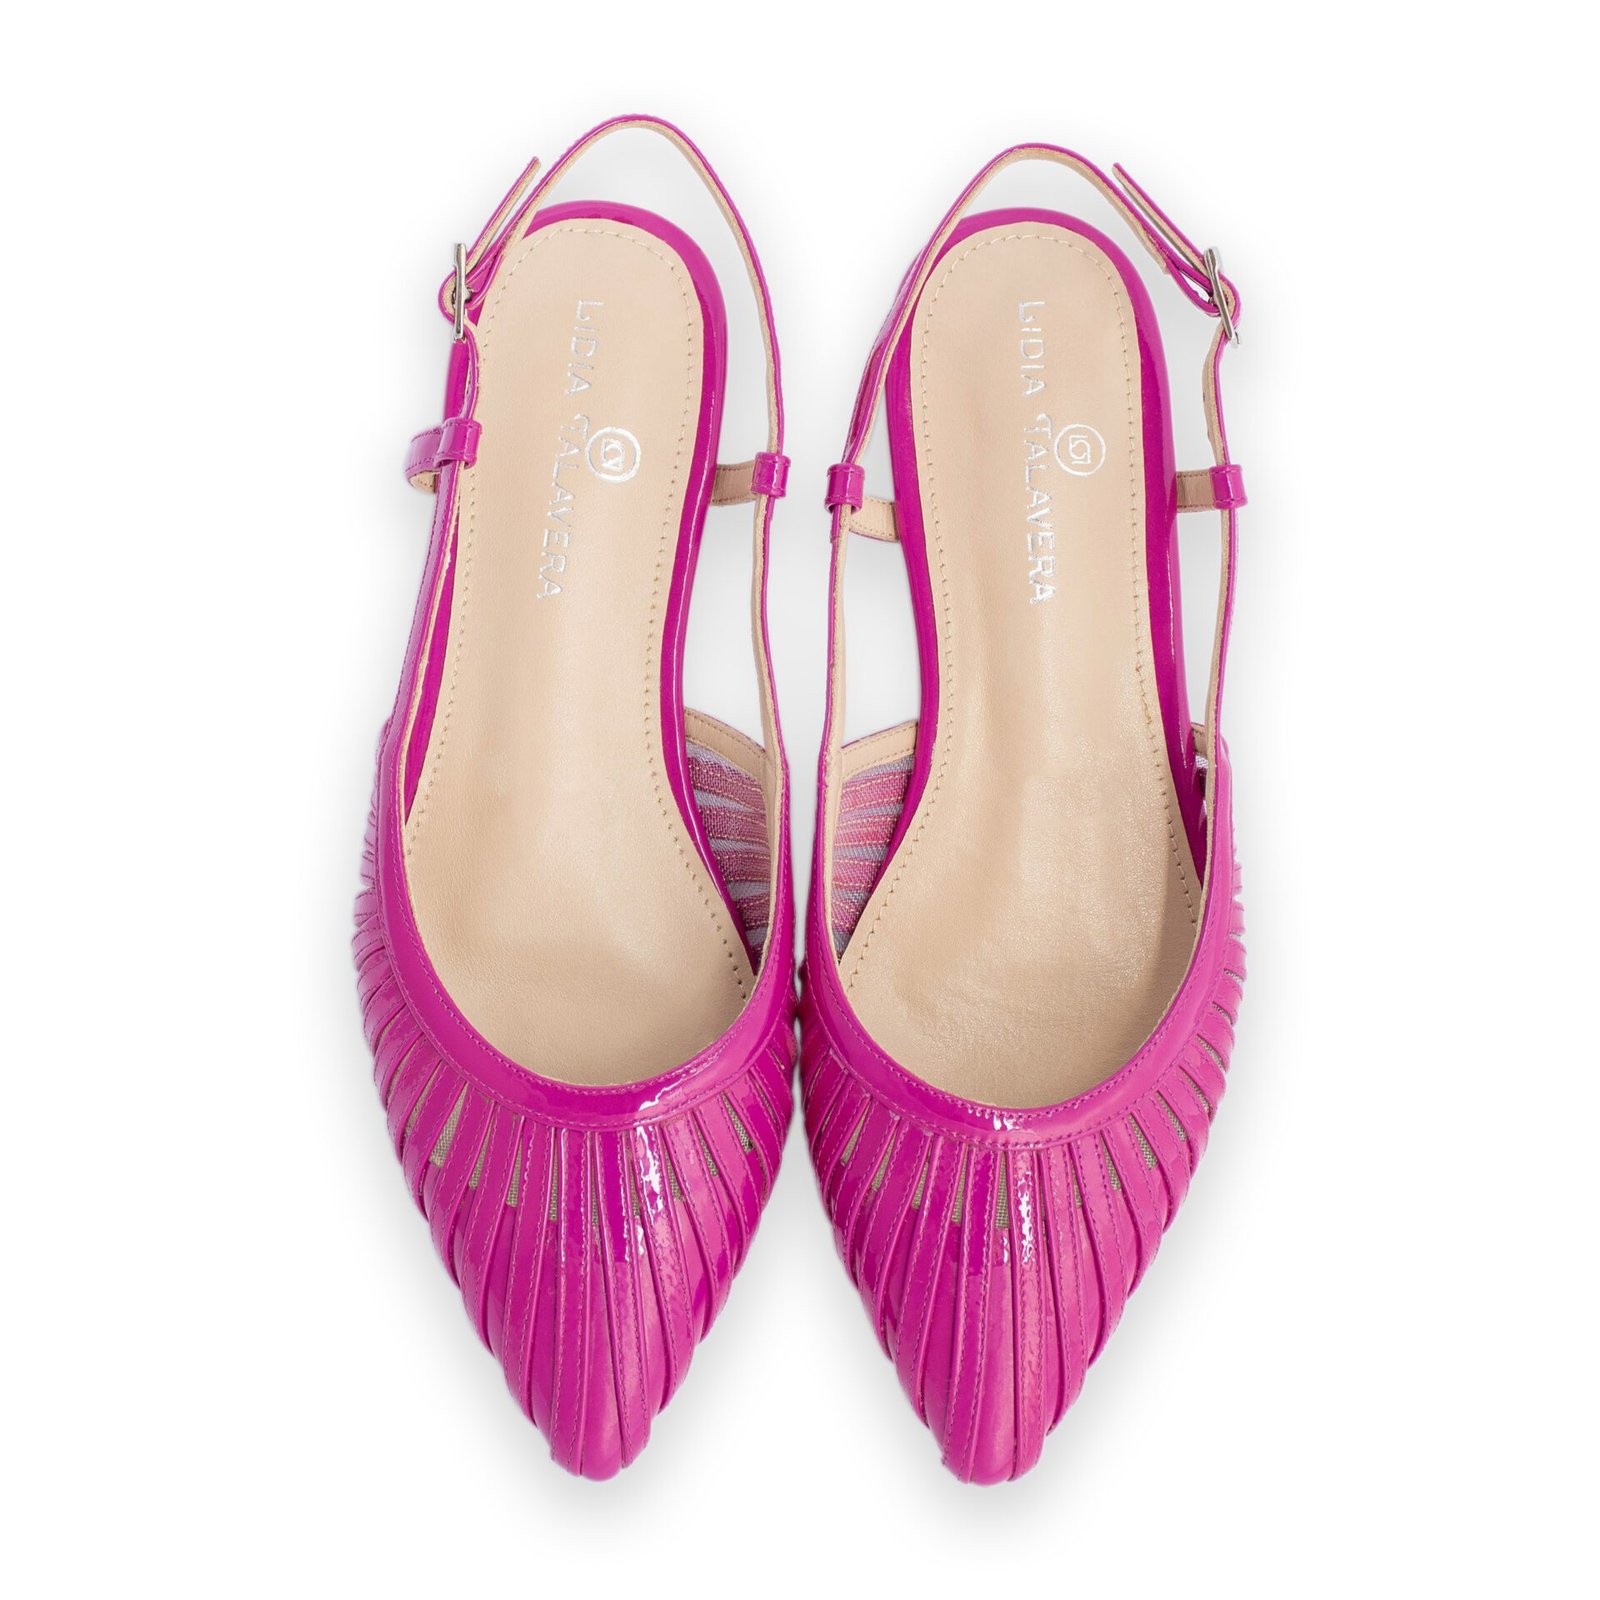 Pink flat wedding shoes